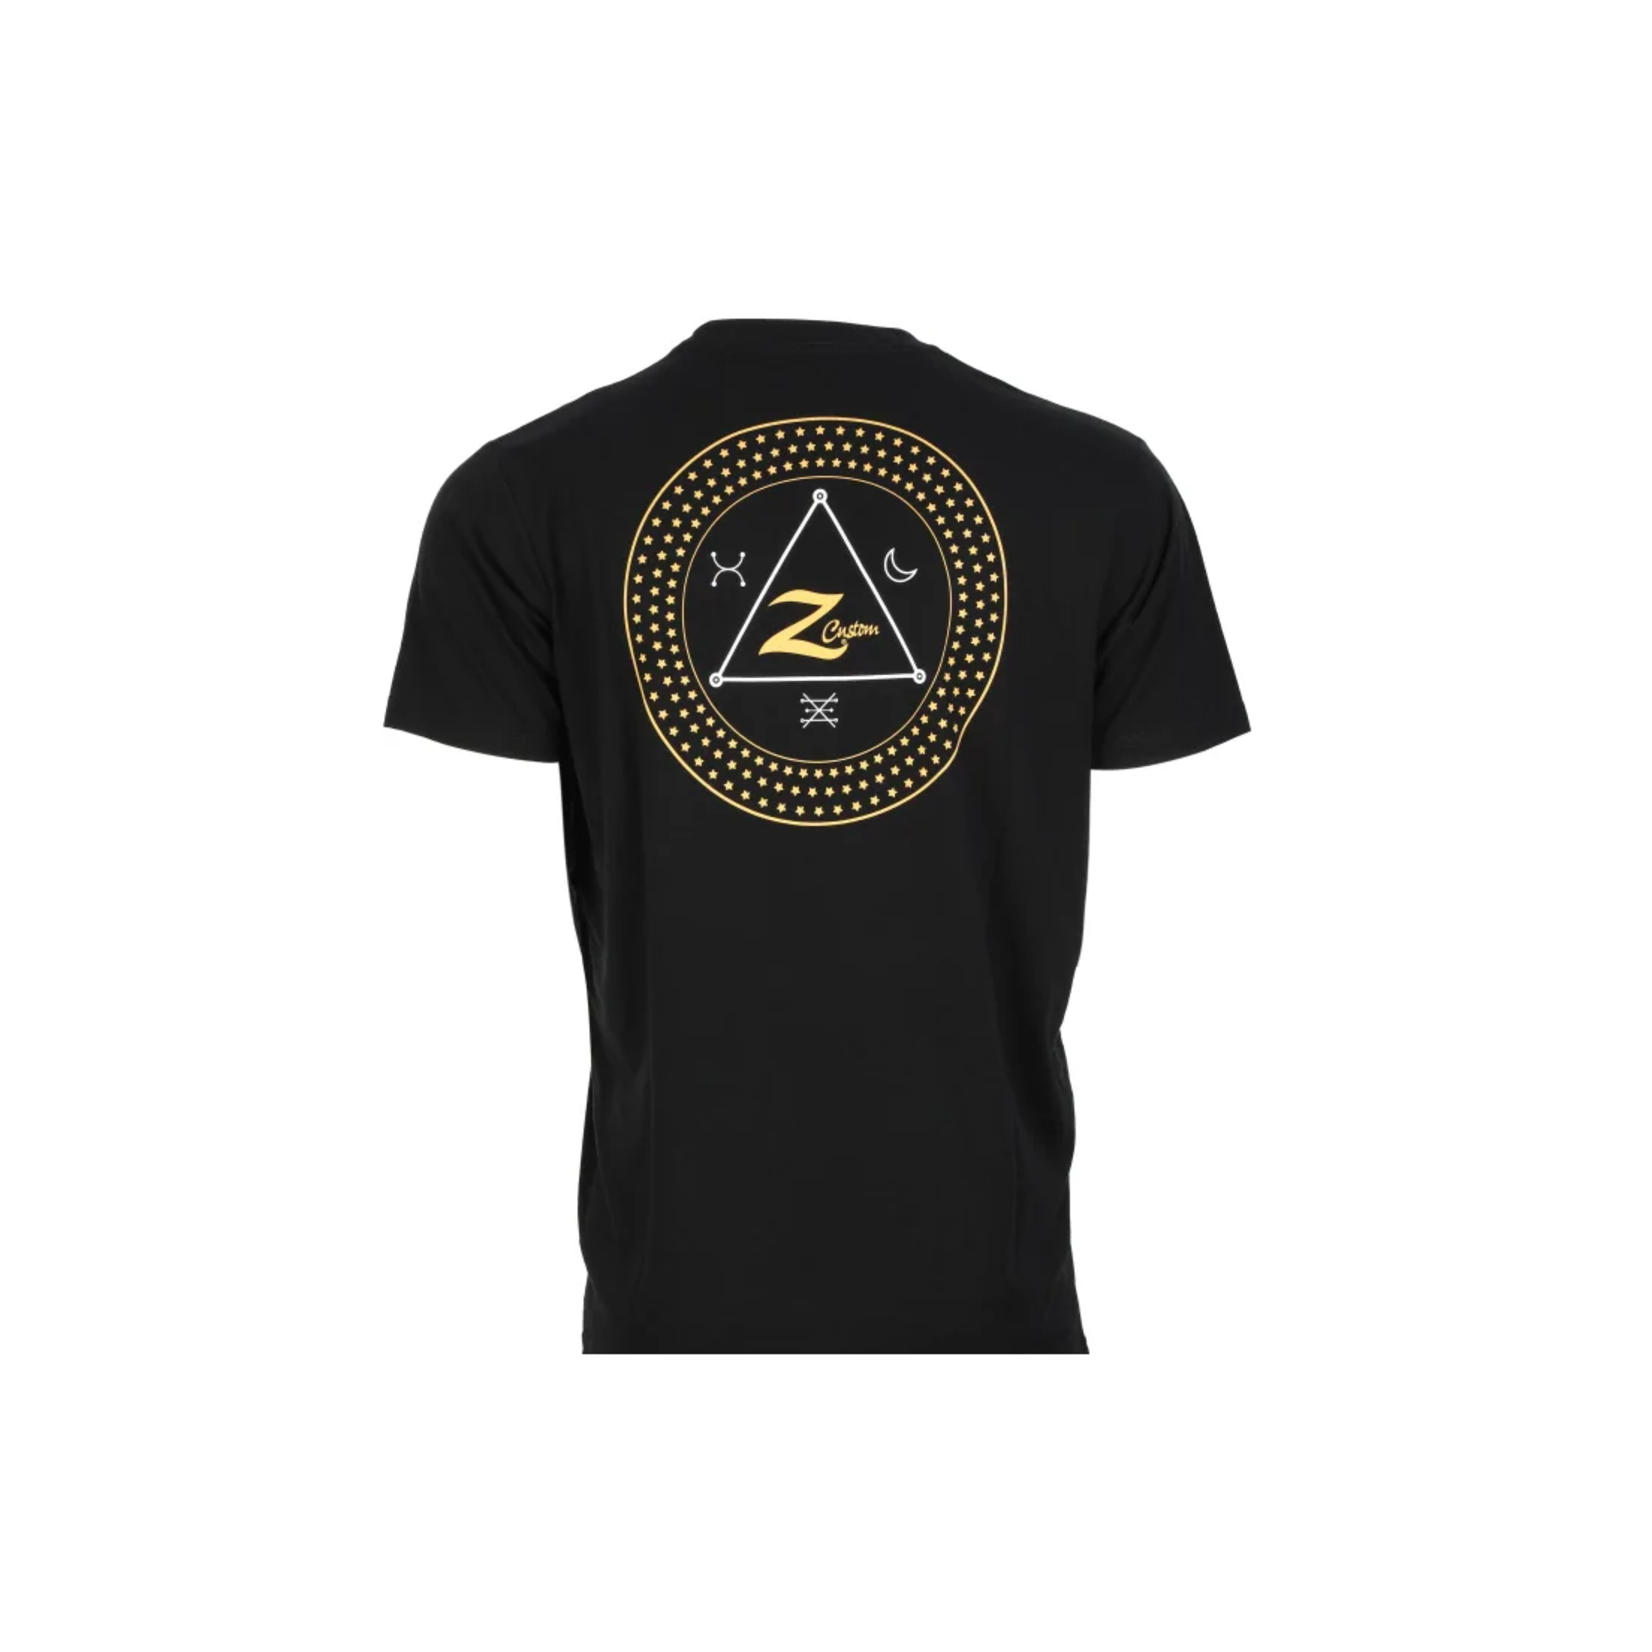 Zildjian Zildjian Limited Edition Z Custom Black T-Shirt XL